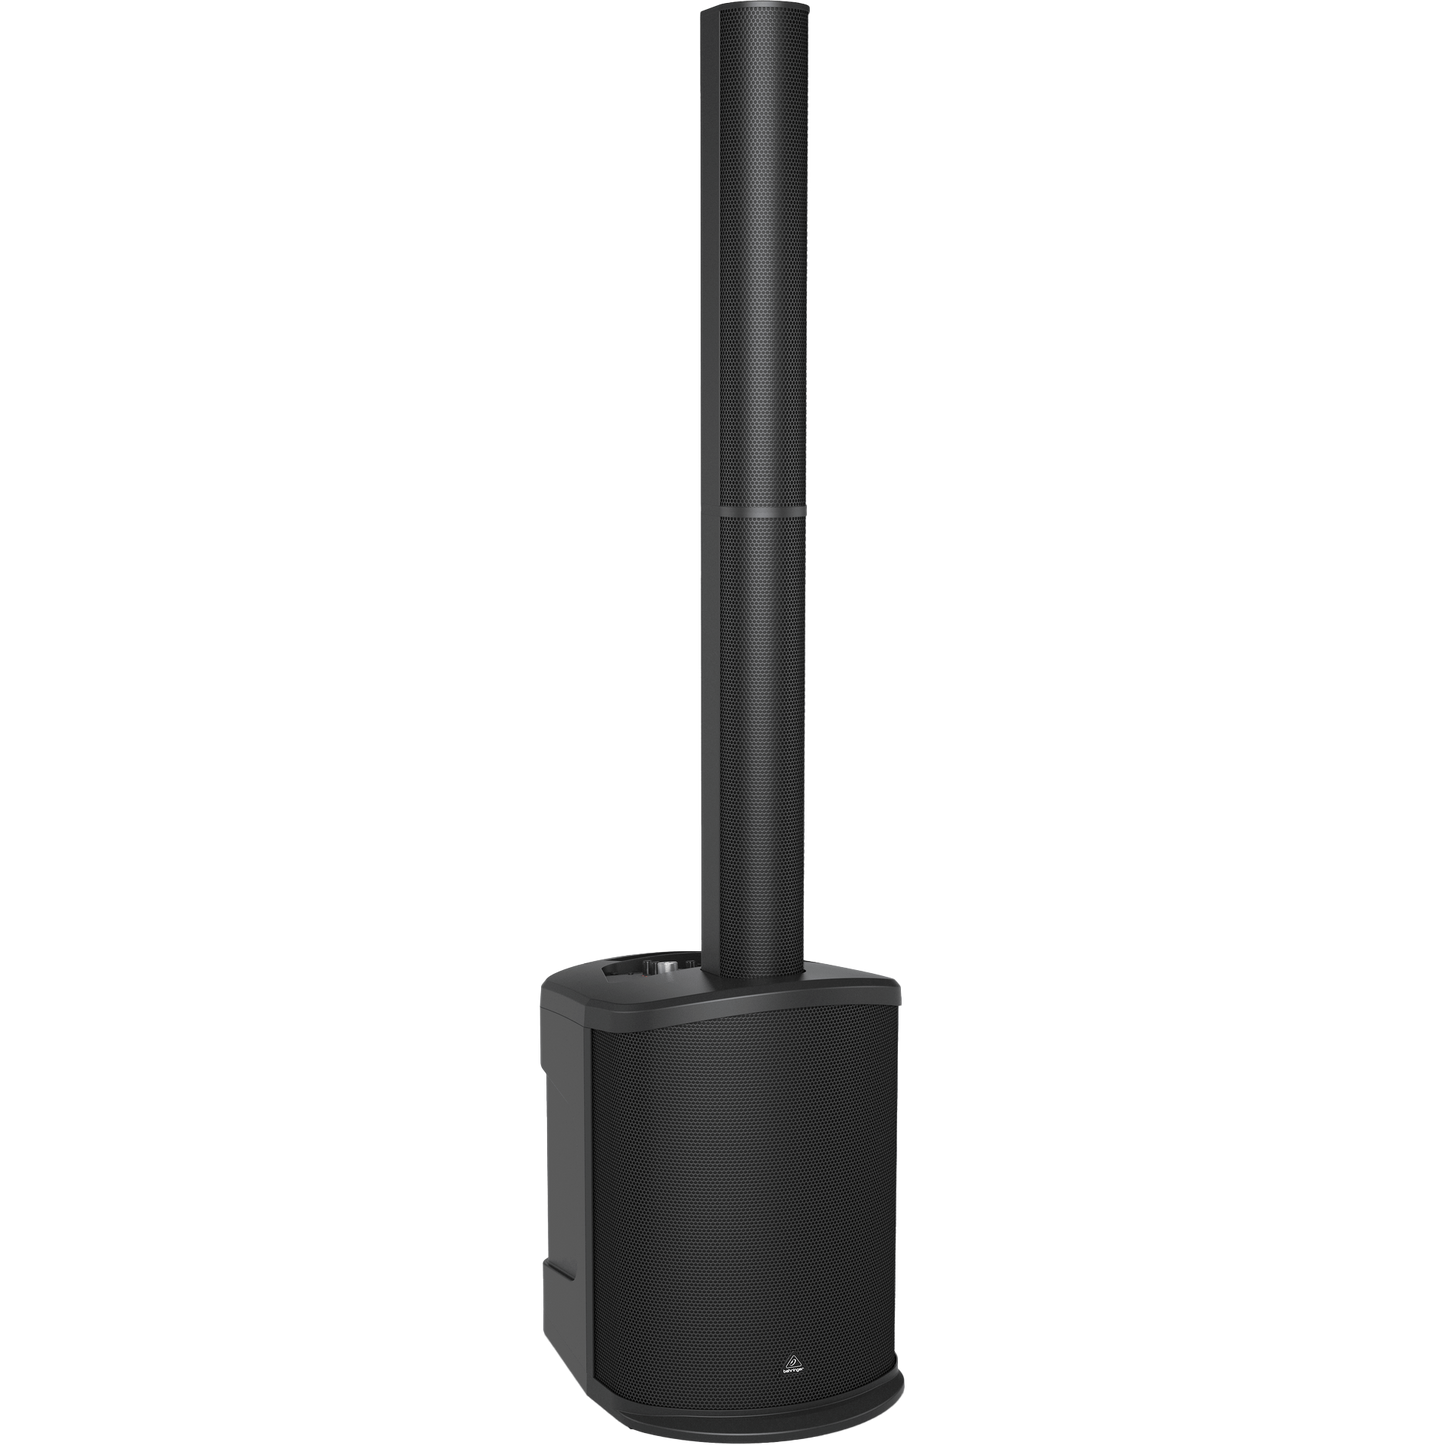 Behringer C210 200-Watt Bluetooth Column Loudspeaker